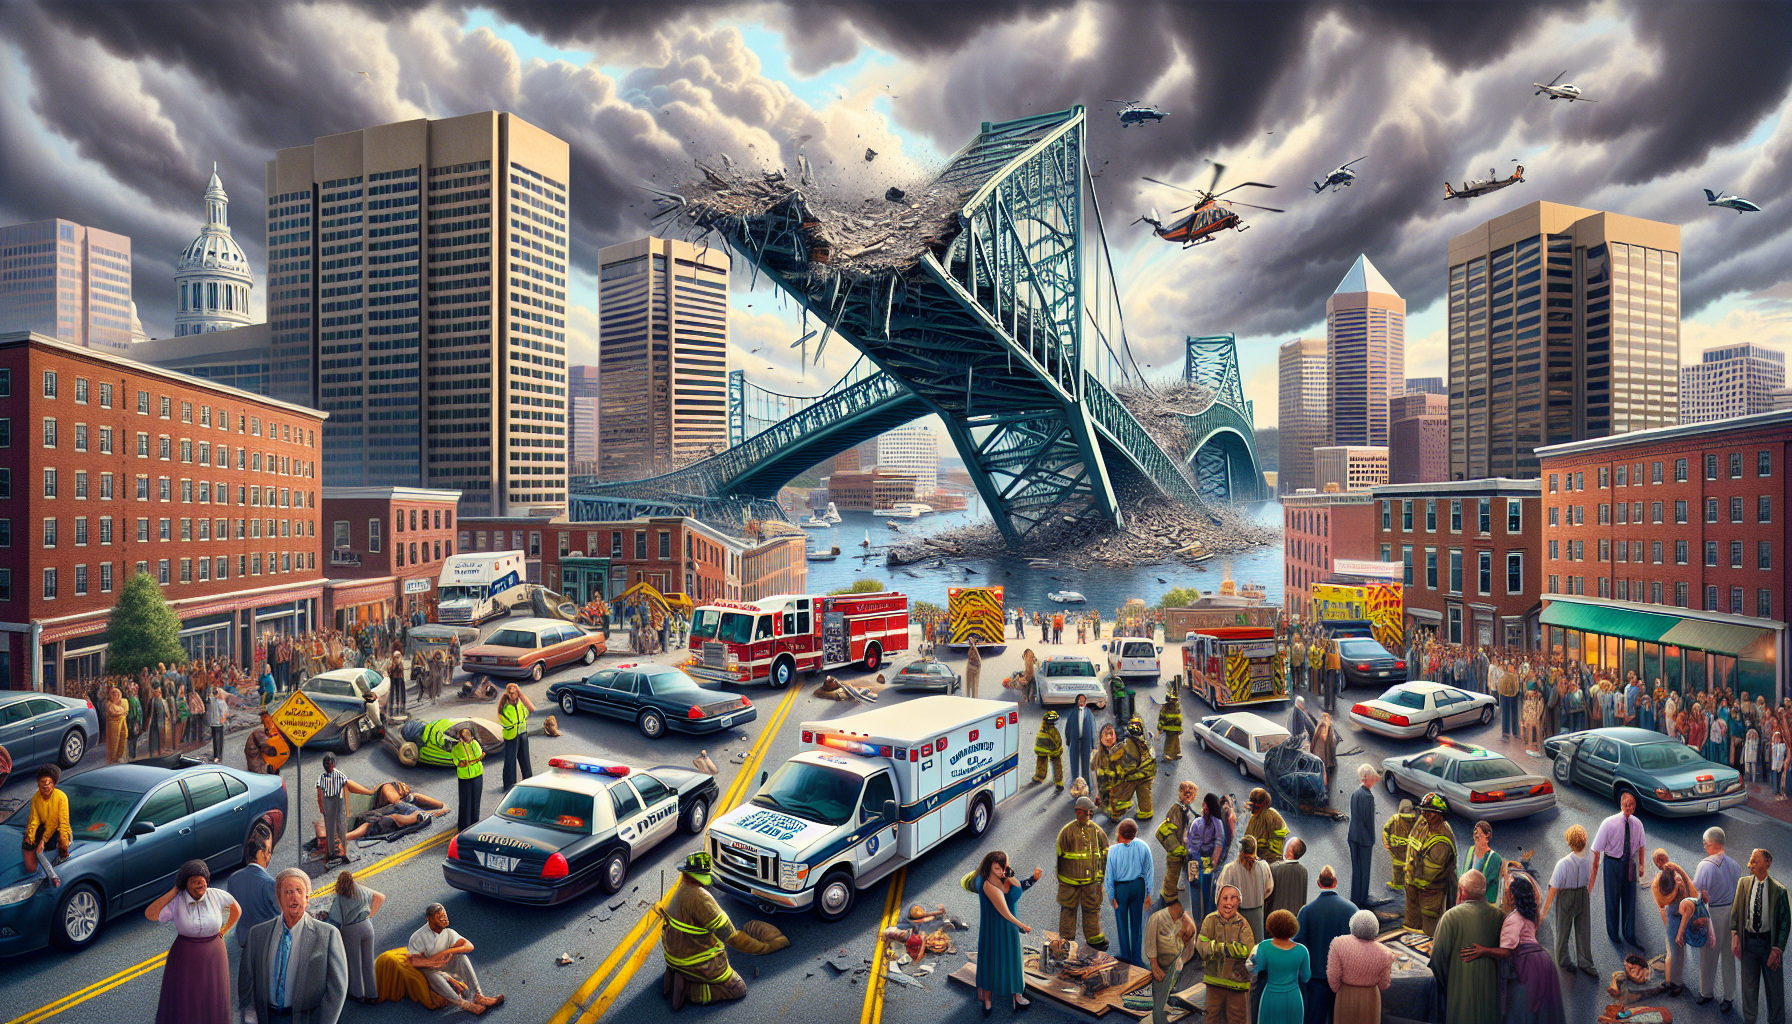 Baltimore crisis: catastrophic Key Bridge collapse disrupts city life